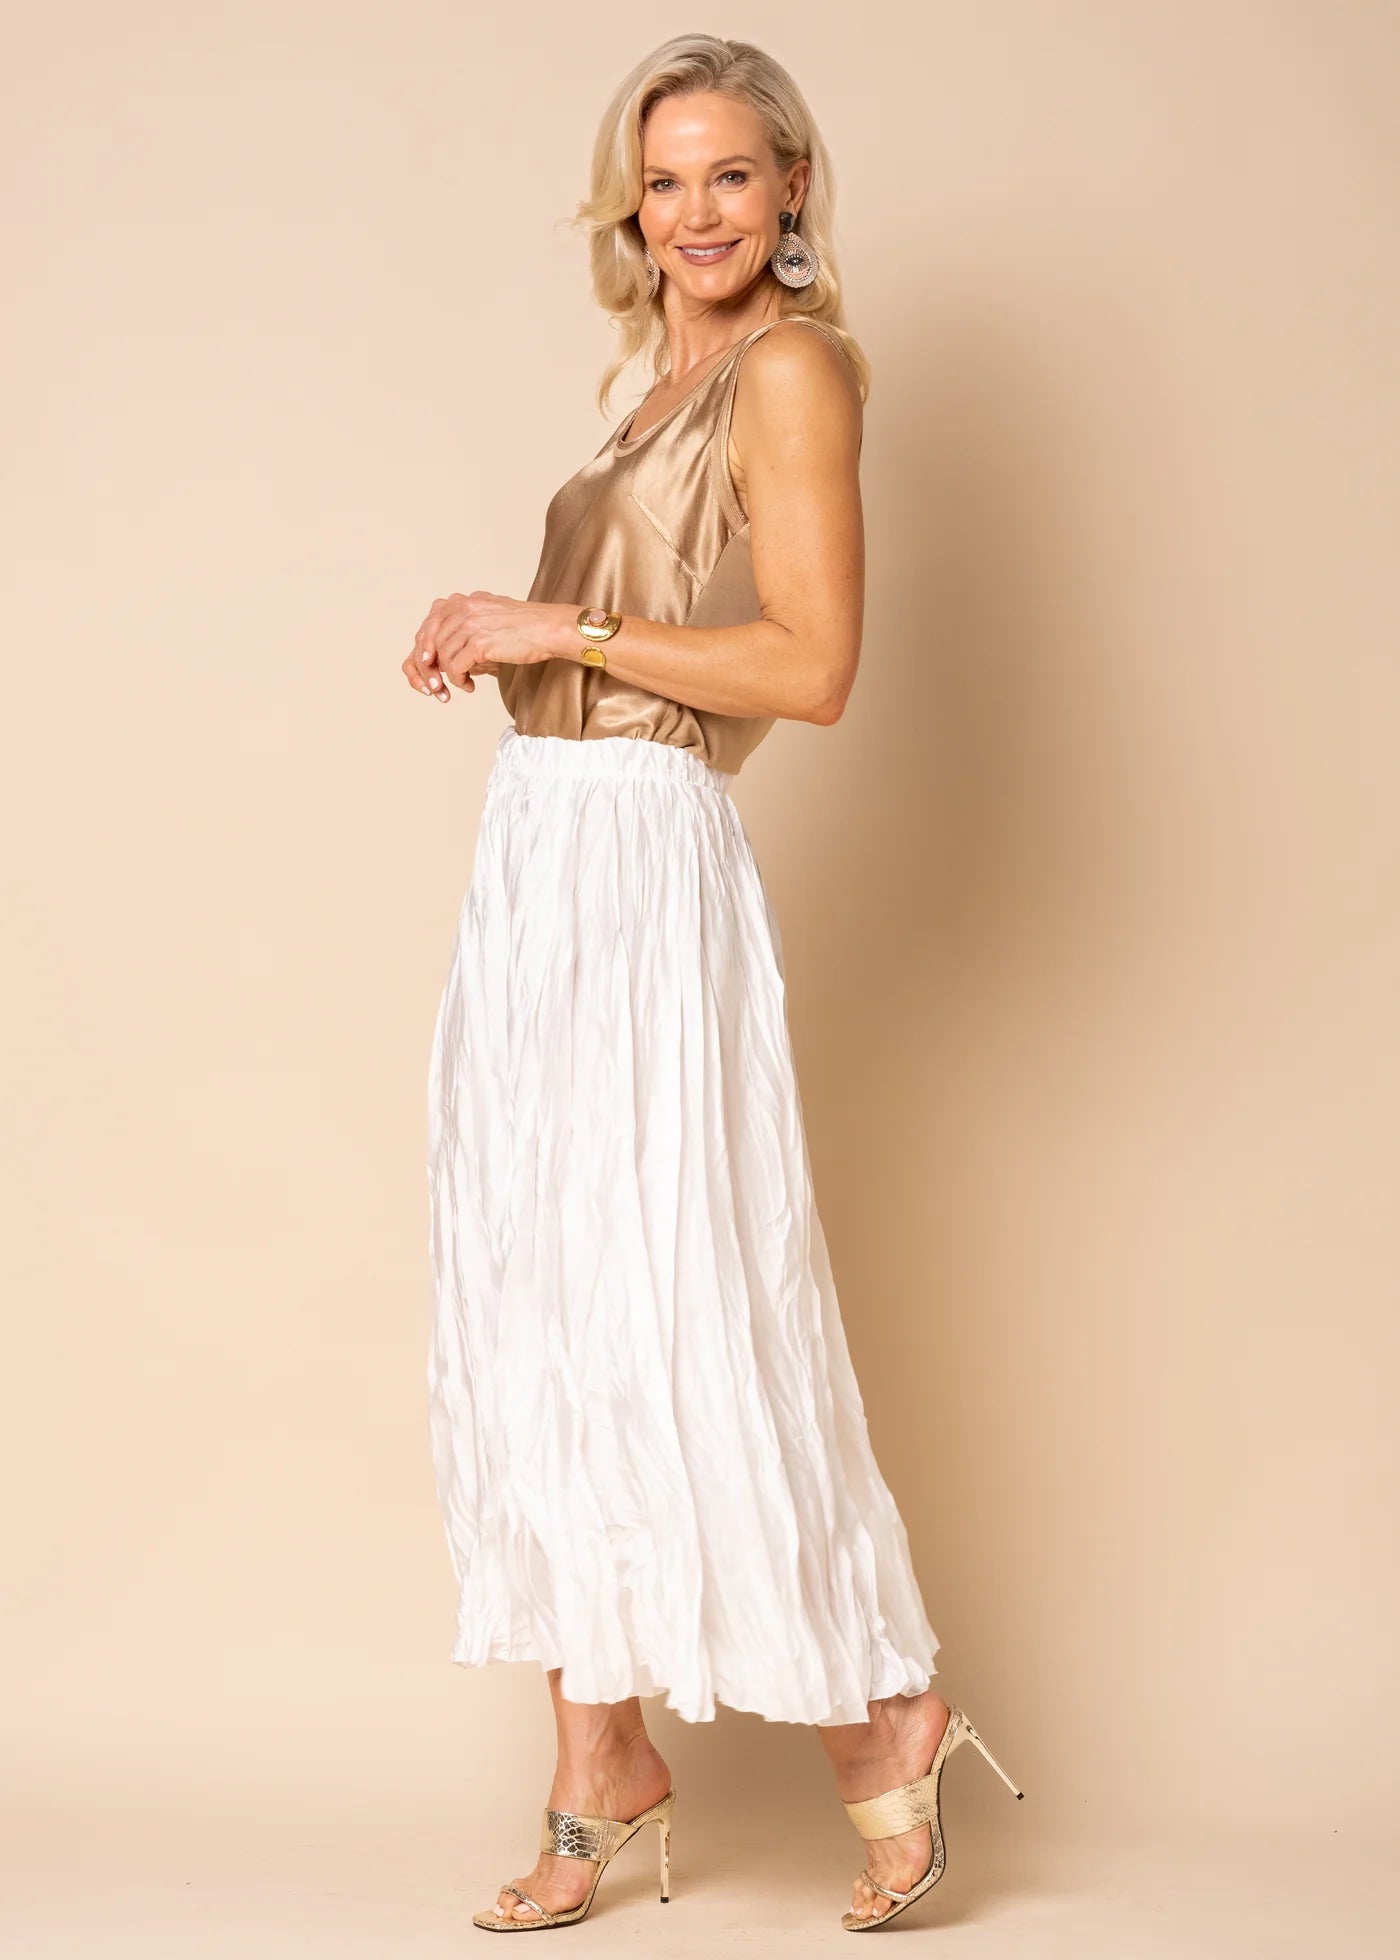 Kahina Skirt in White - Pinkhill, Darwin boutique, Australian high end fashion, Darwin Fashion